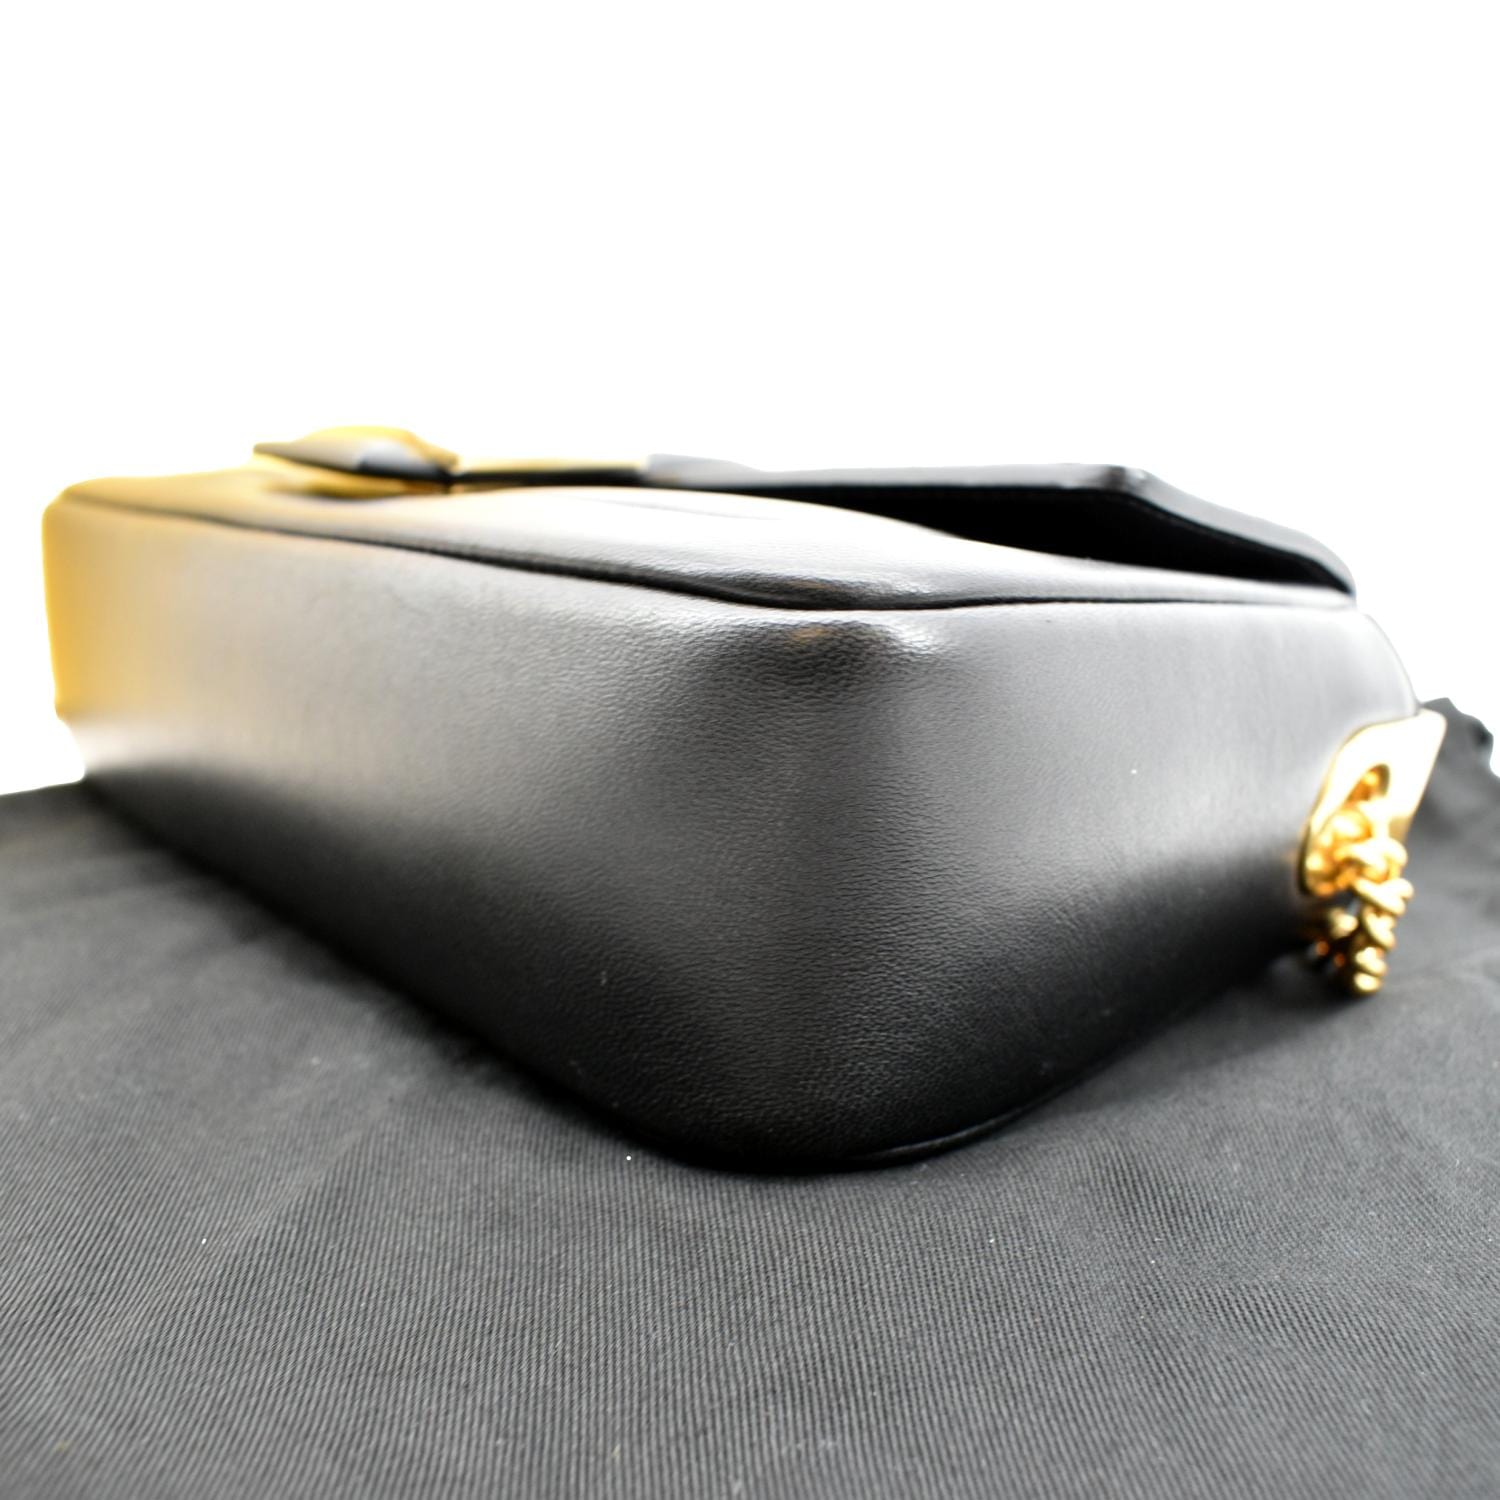 Baguette Mini - Black leather bag